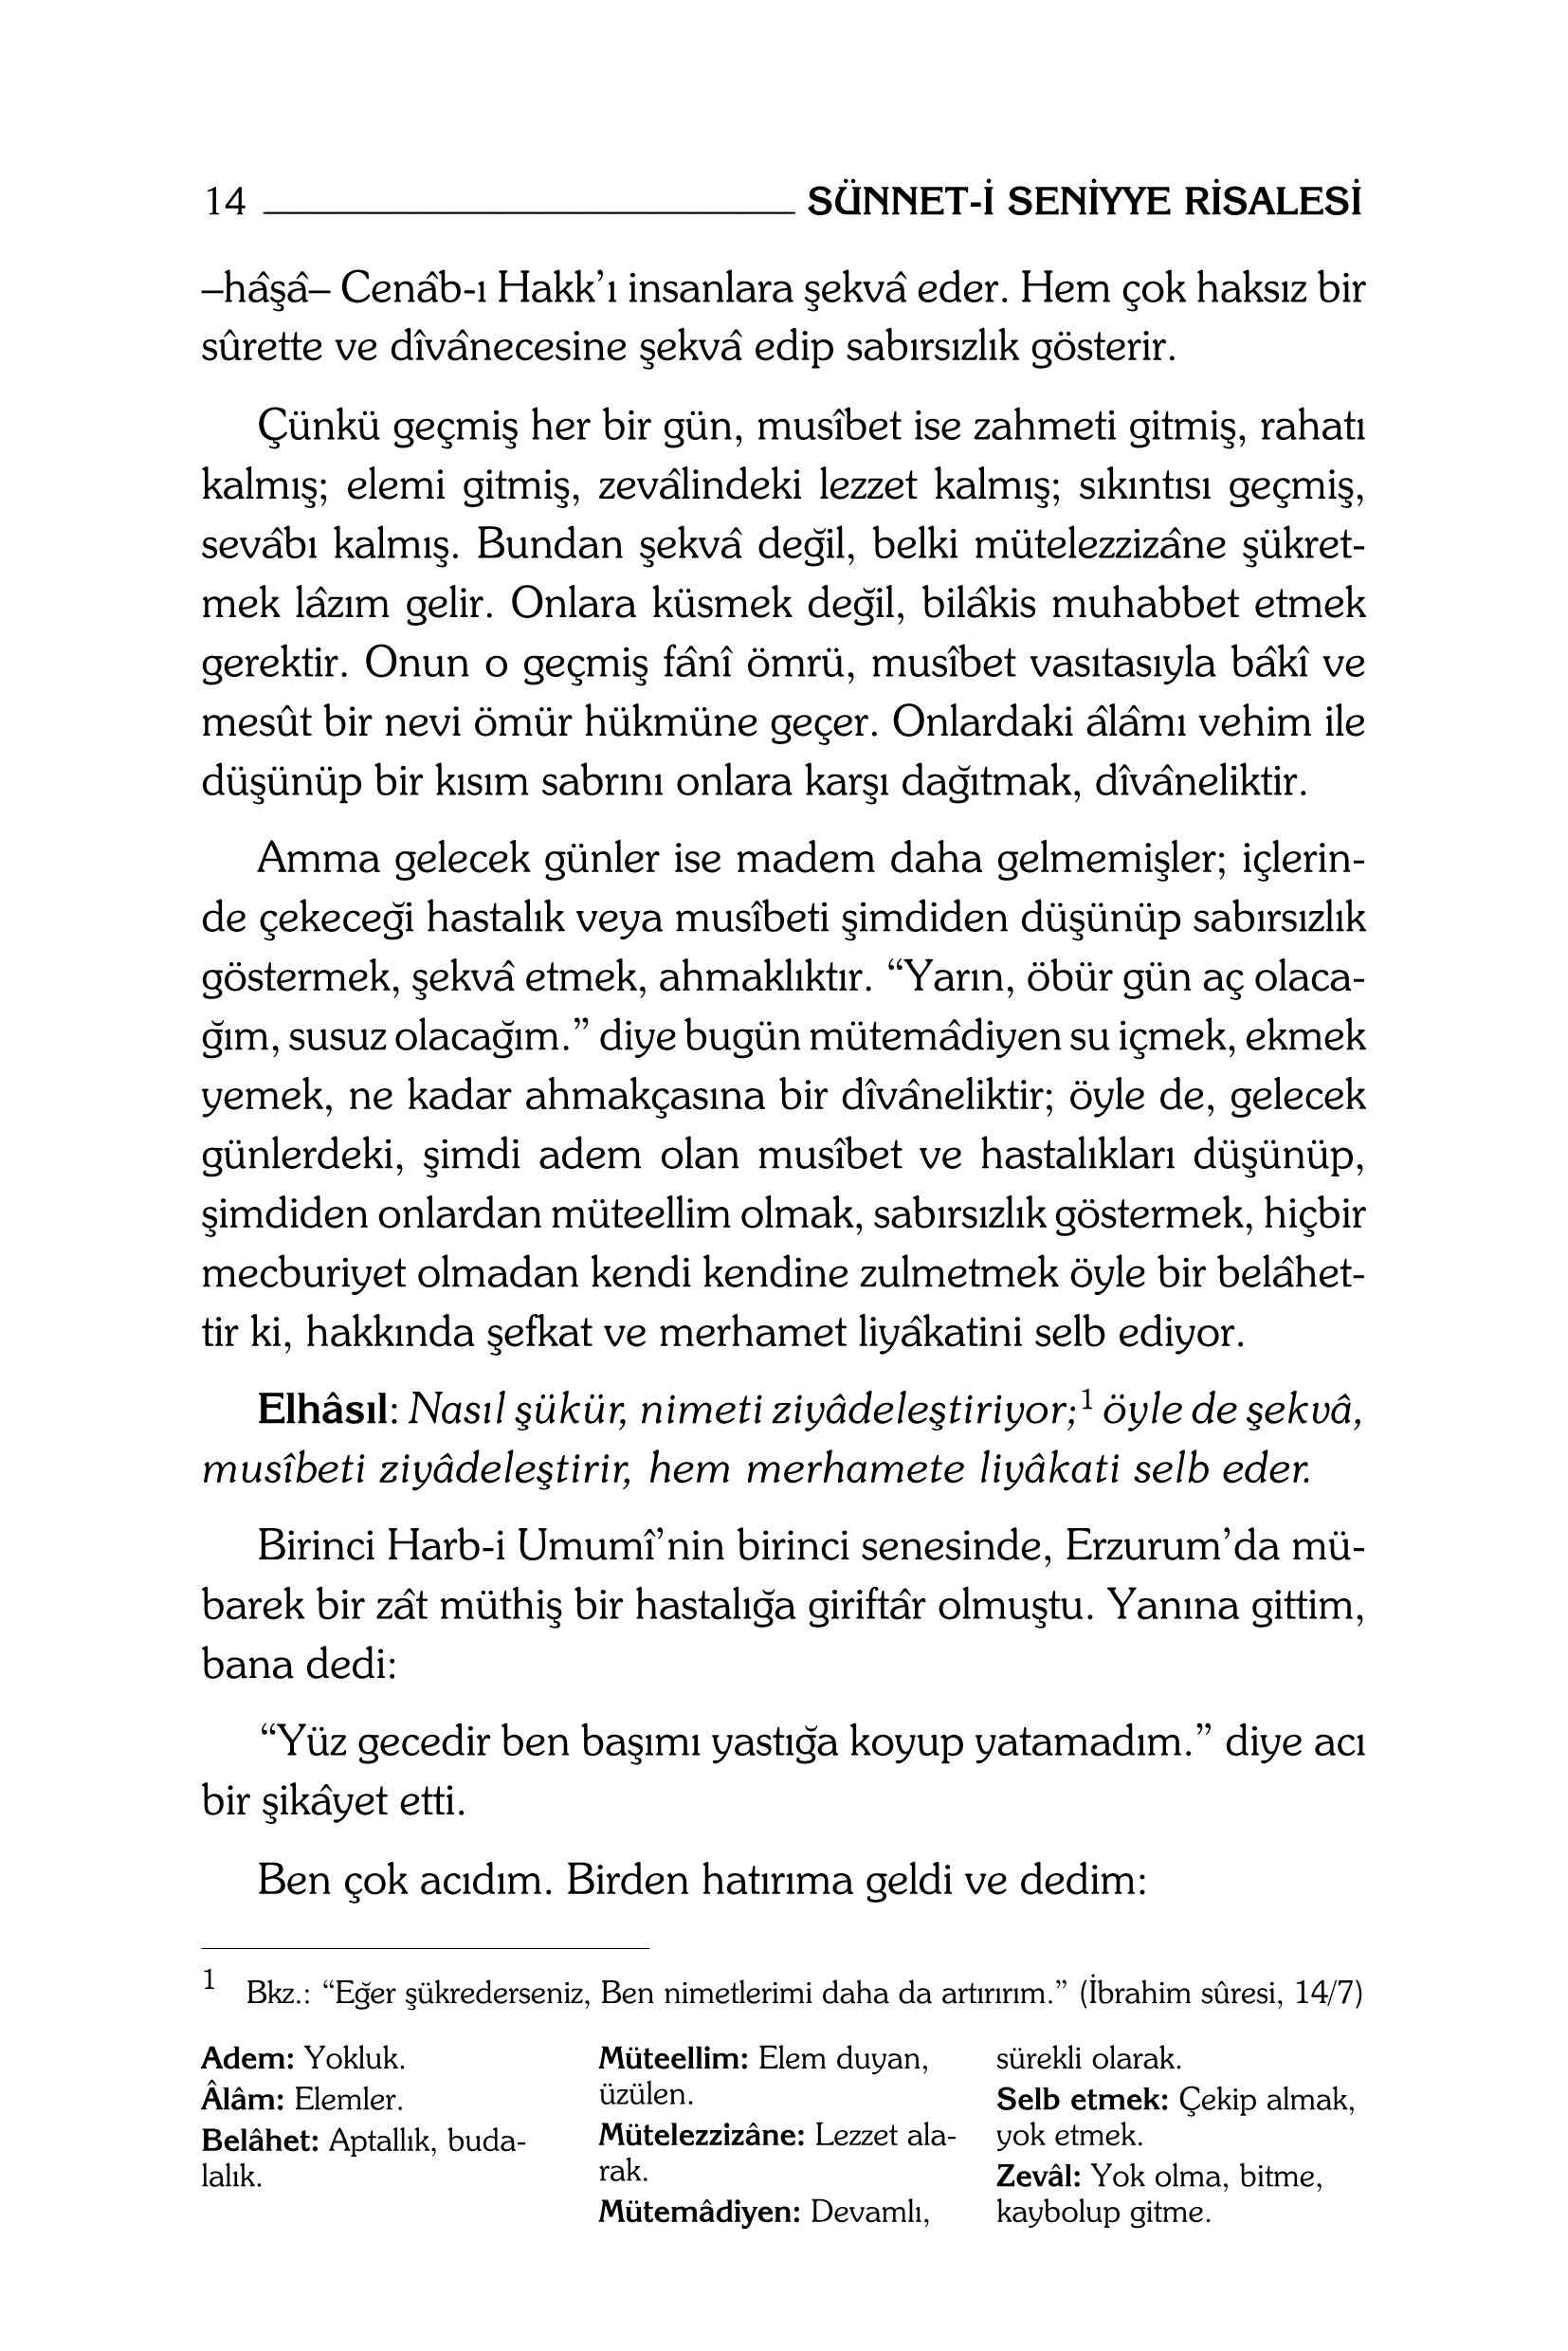 B Said Nursi - Sunnet-i Seniyye Risalesi (Kelime Aciklamali) - SahdamarY.pdf, 265-Sayfa 